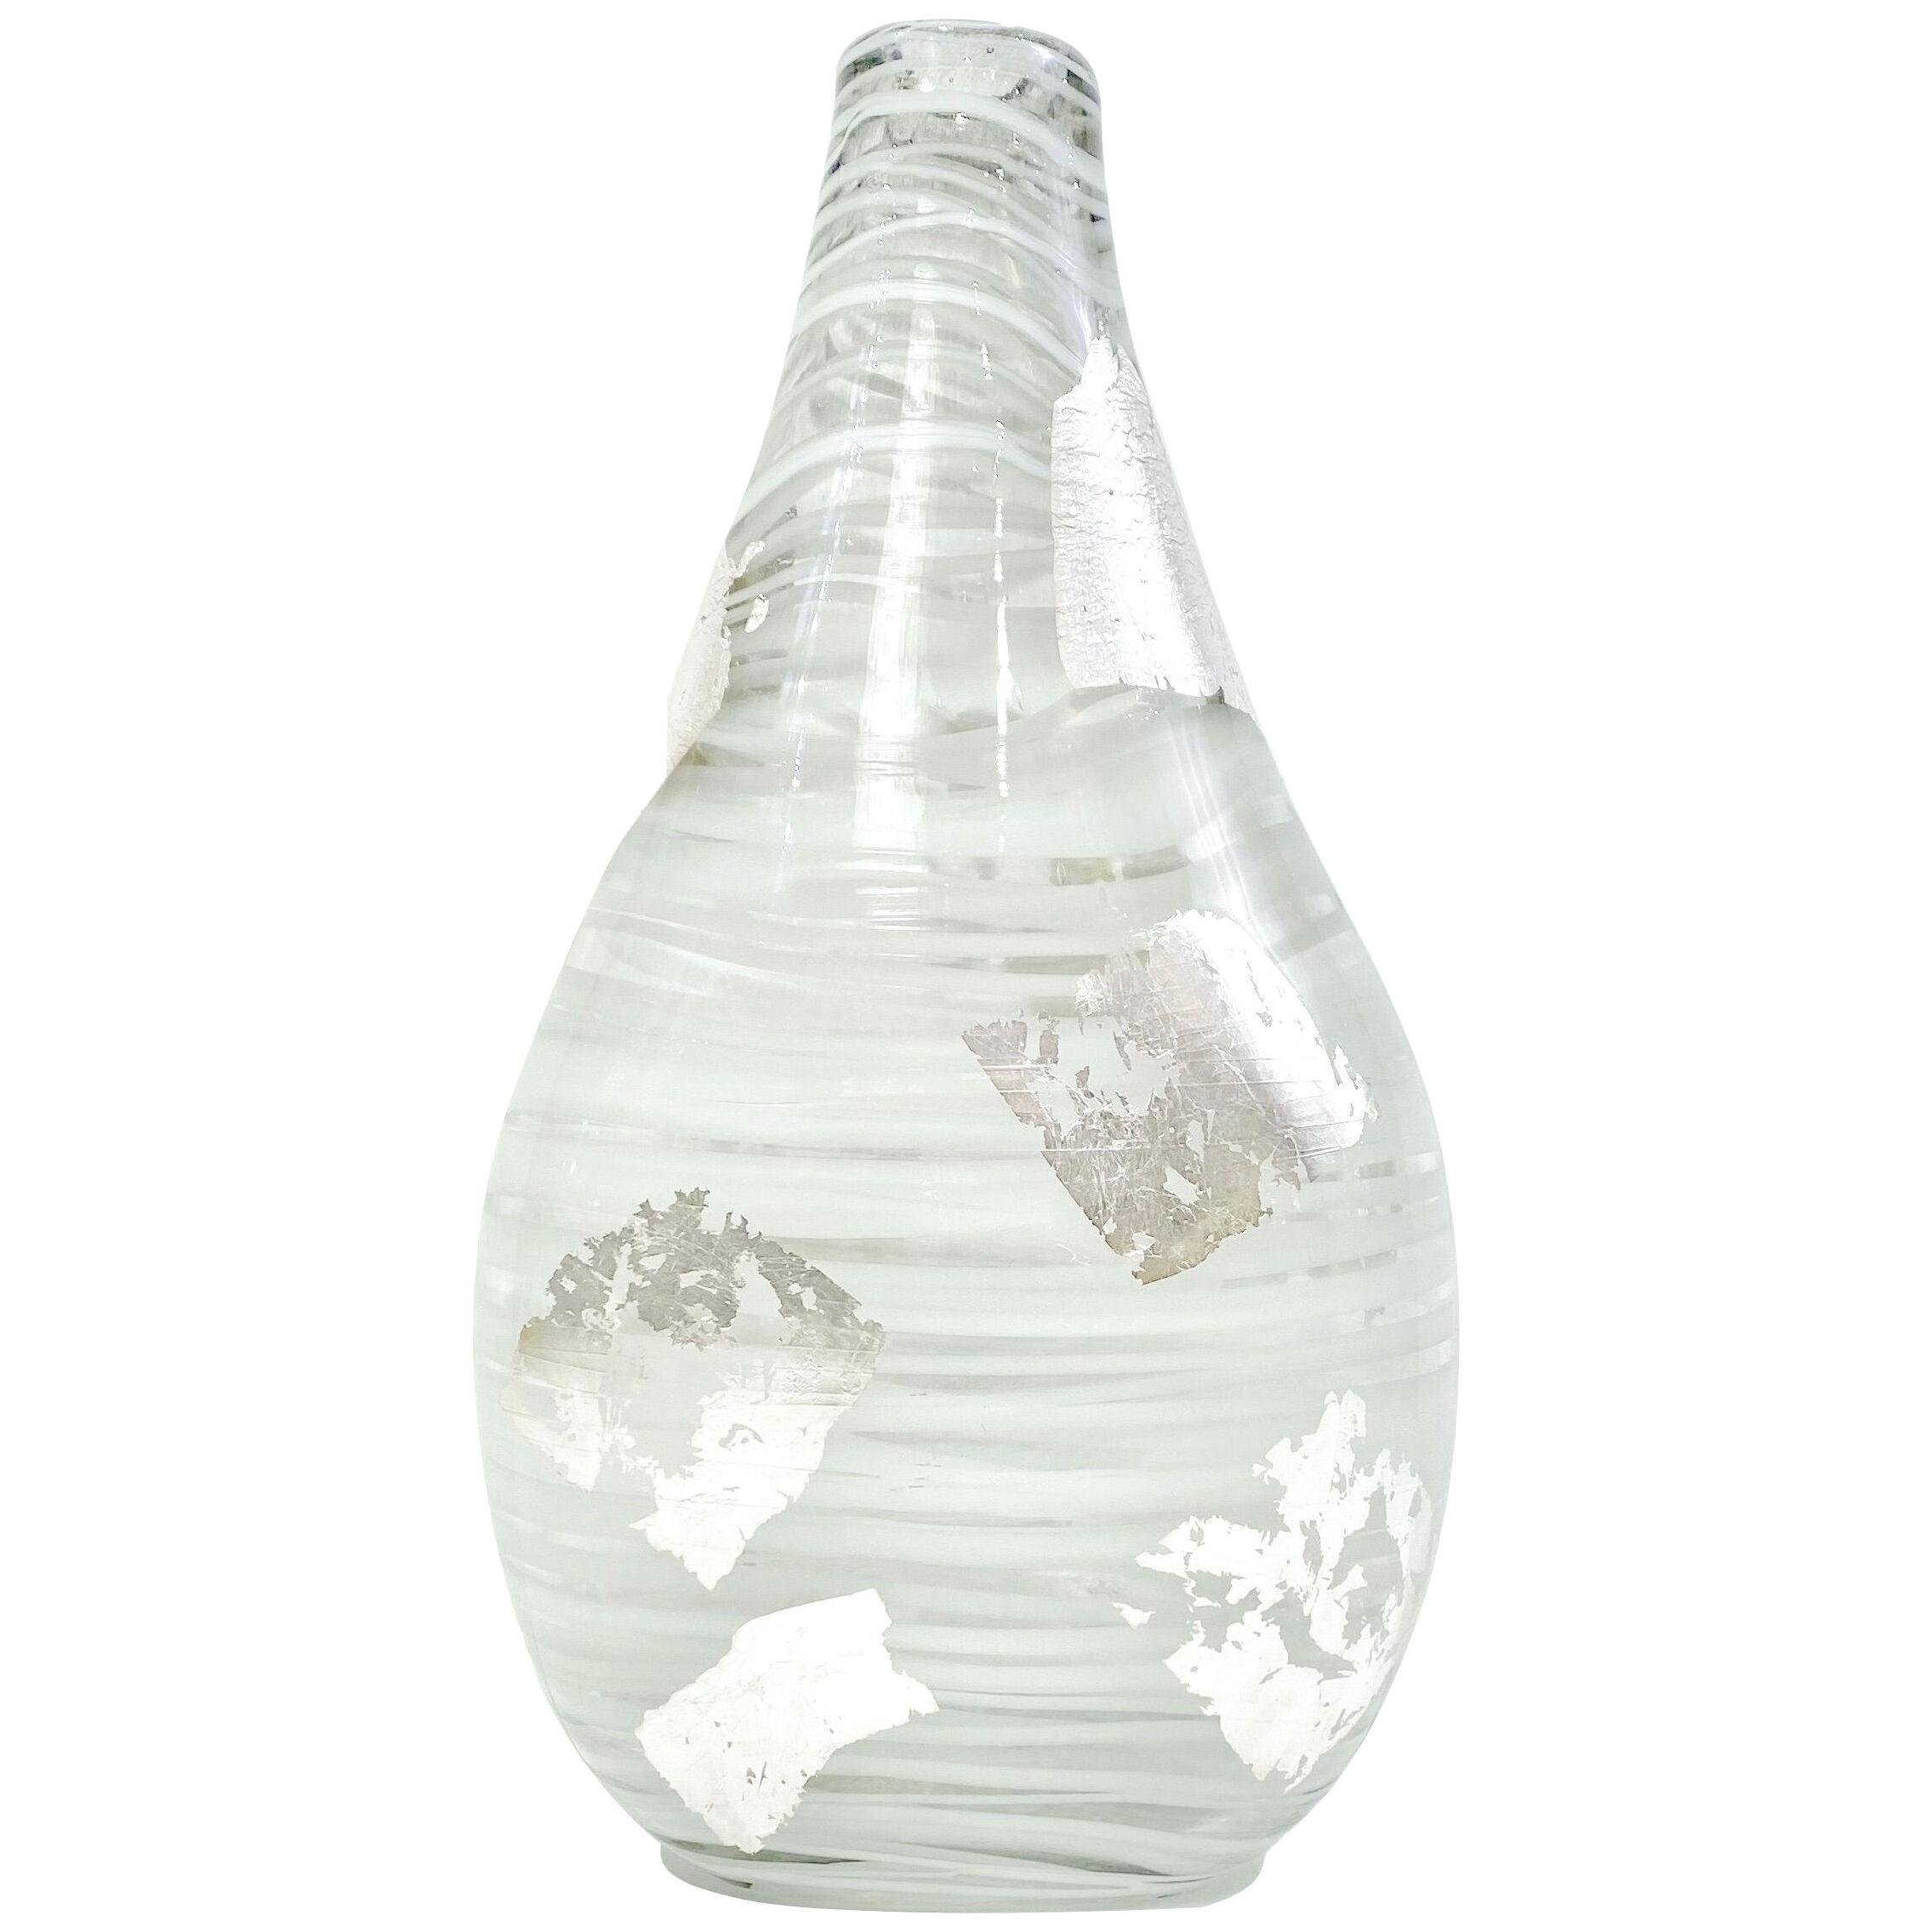 Italian Art Deco Style Silver Leaf White Clear Murano Glass Sculpture Vase